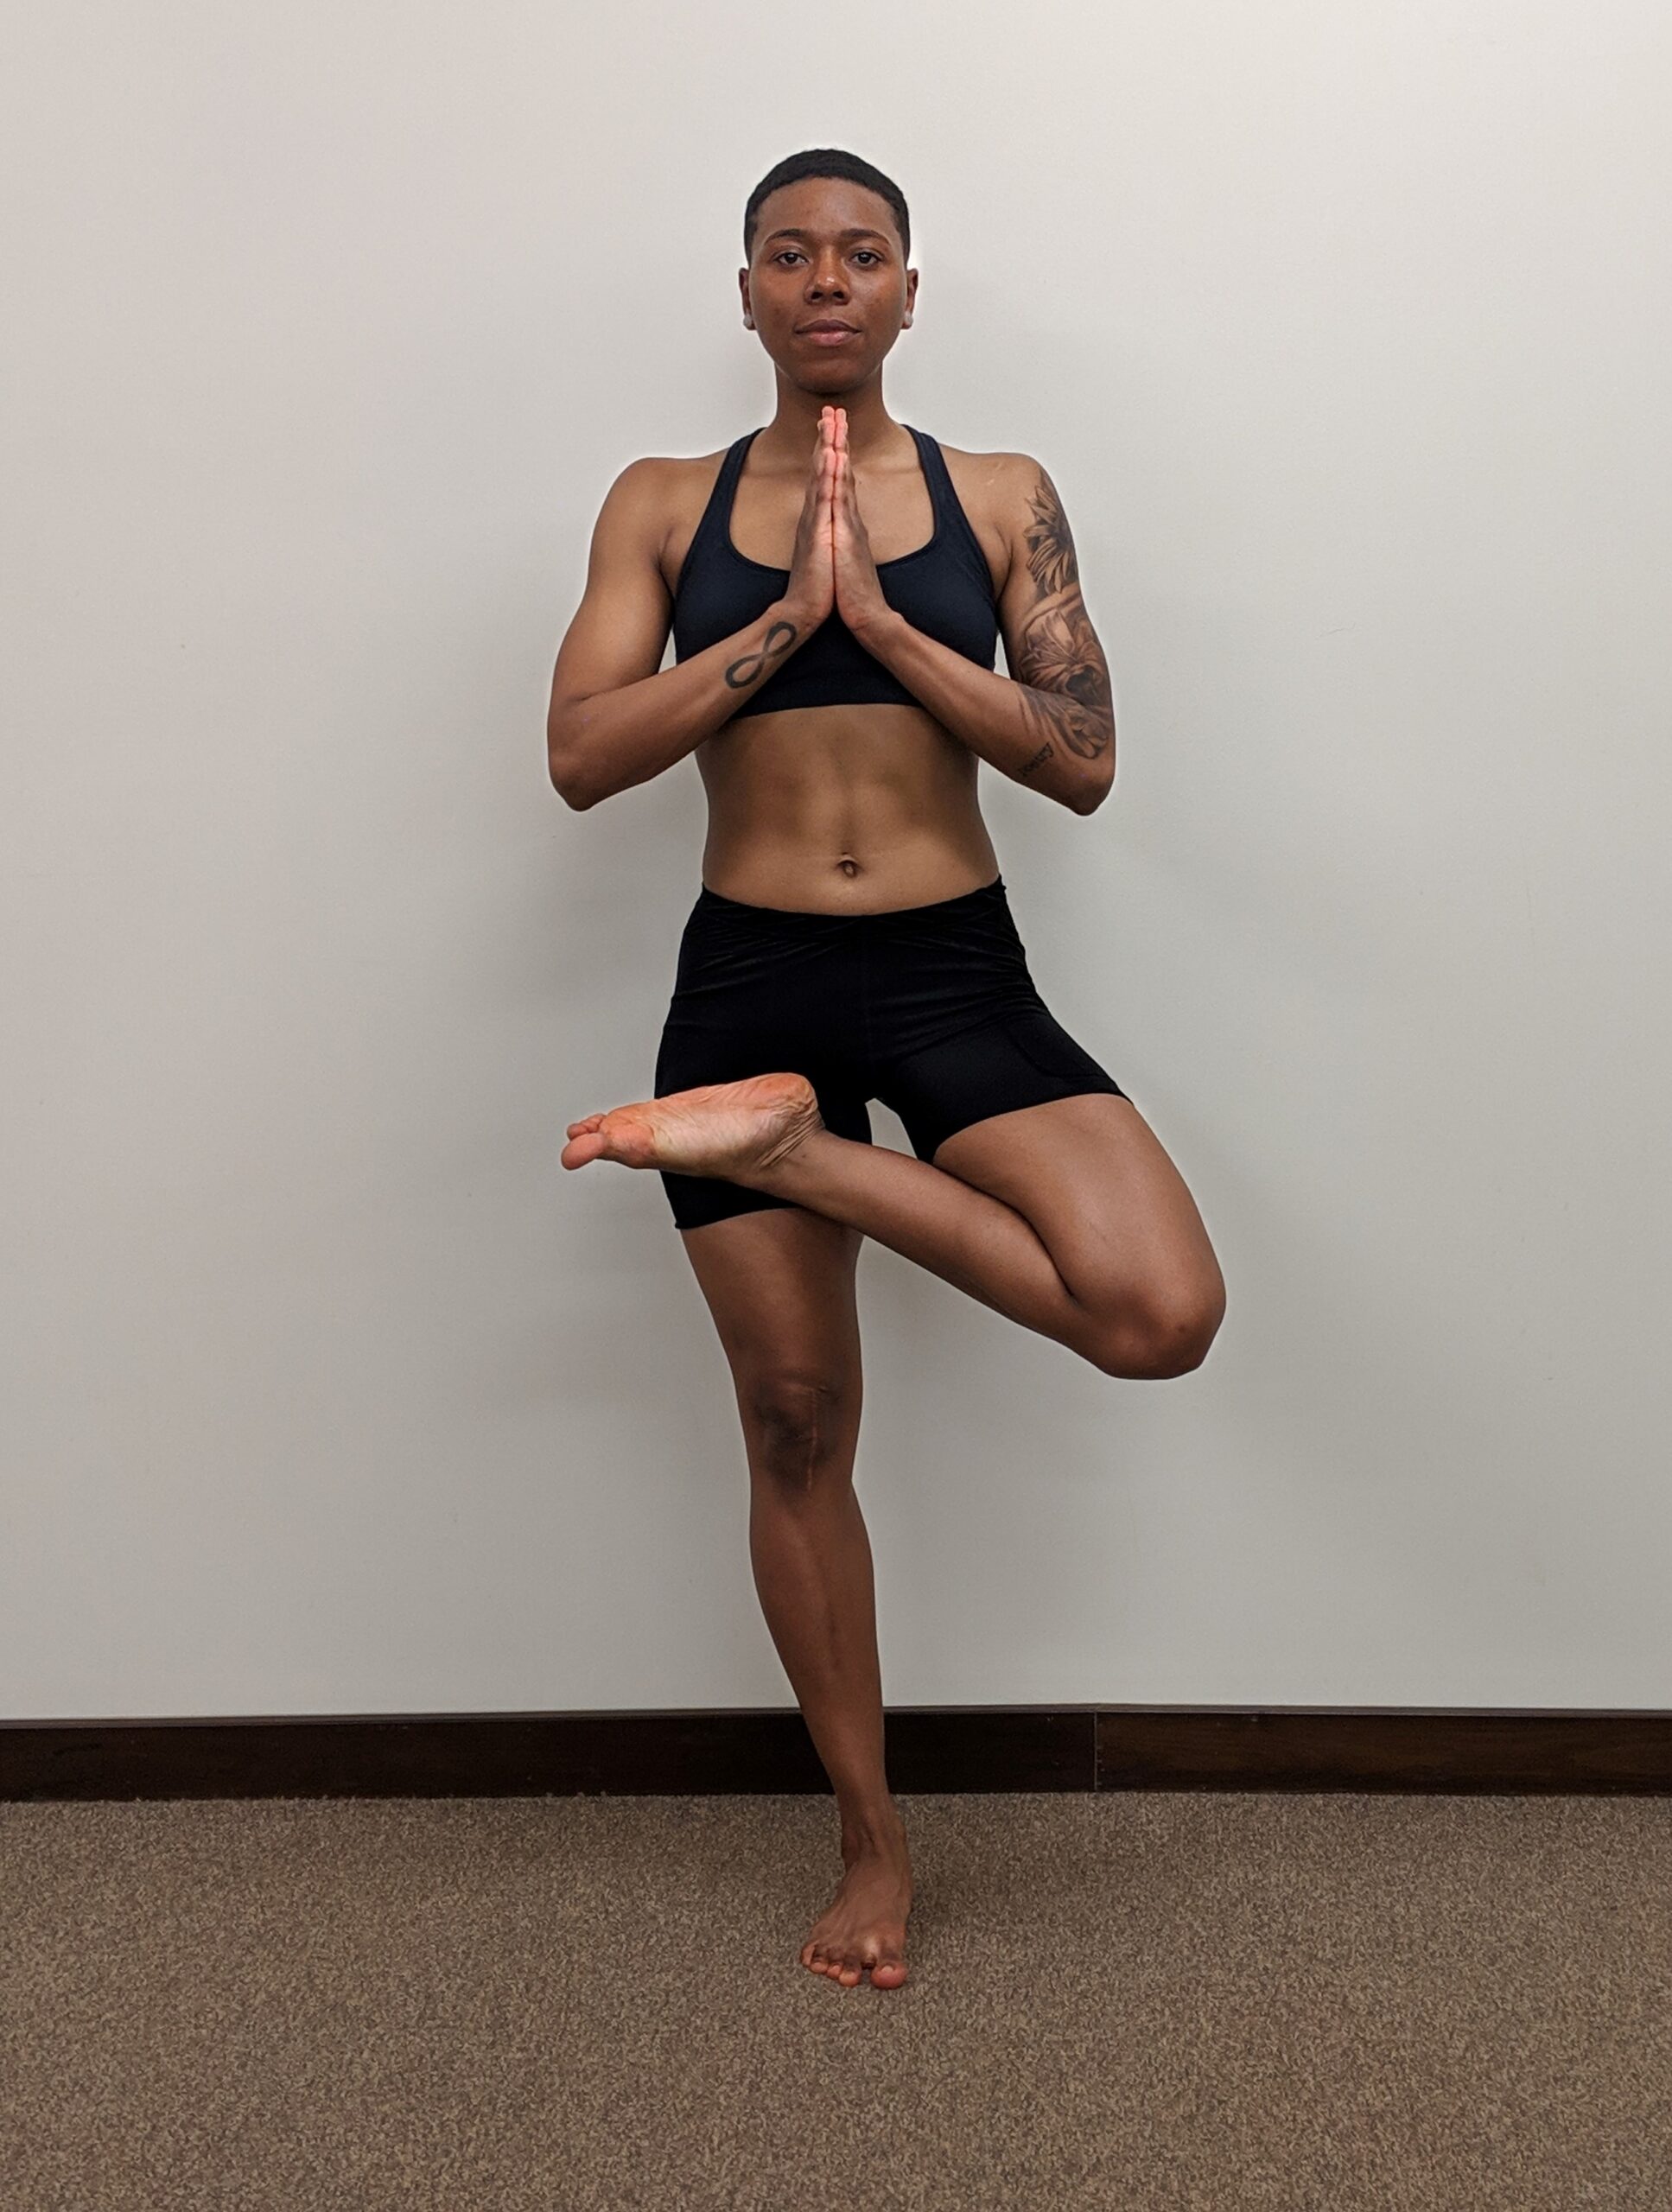 Bikram Yoga - Benefits Of Hot Yoga, With Bikram Yoga Poses Pictures -  Kindle edition by Voss, Monika. Health, Fitness & Dieting Kindle eBooks @  Amazon.com.